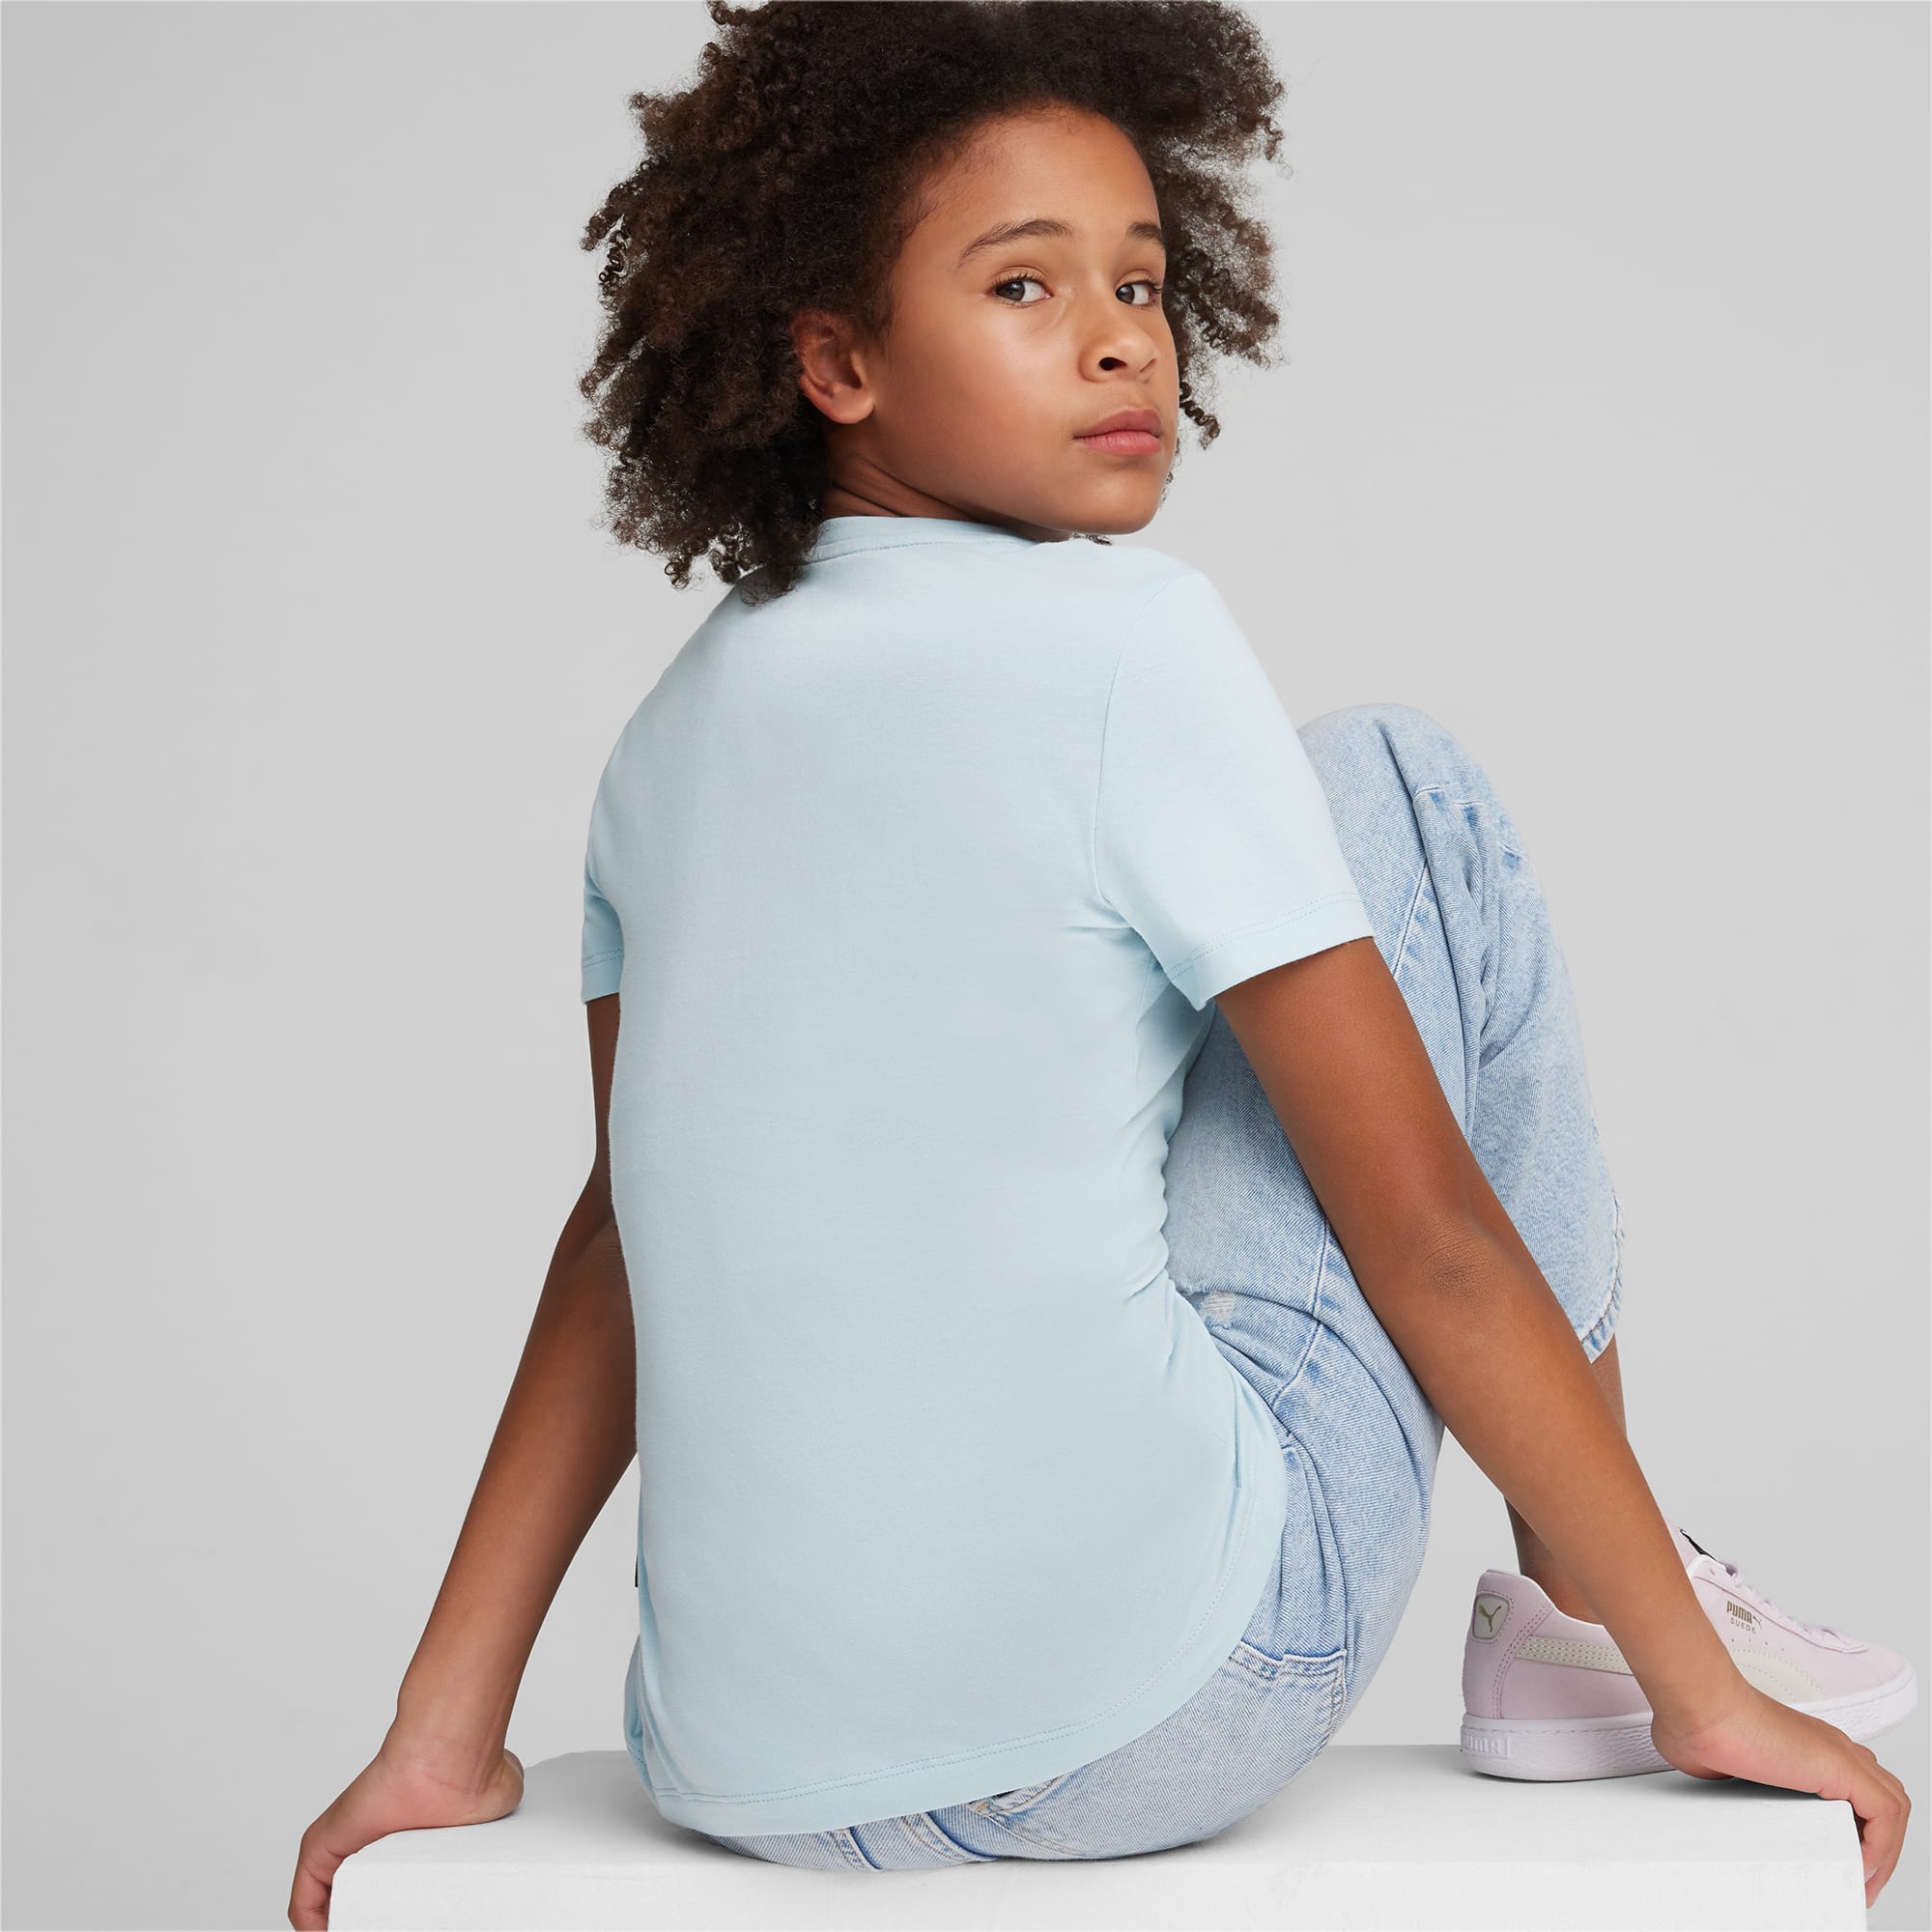 PUMA Essentials Logo Youth T-Shirt, Turquoise Surf, Size 92, Clothing